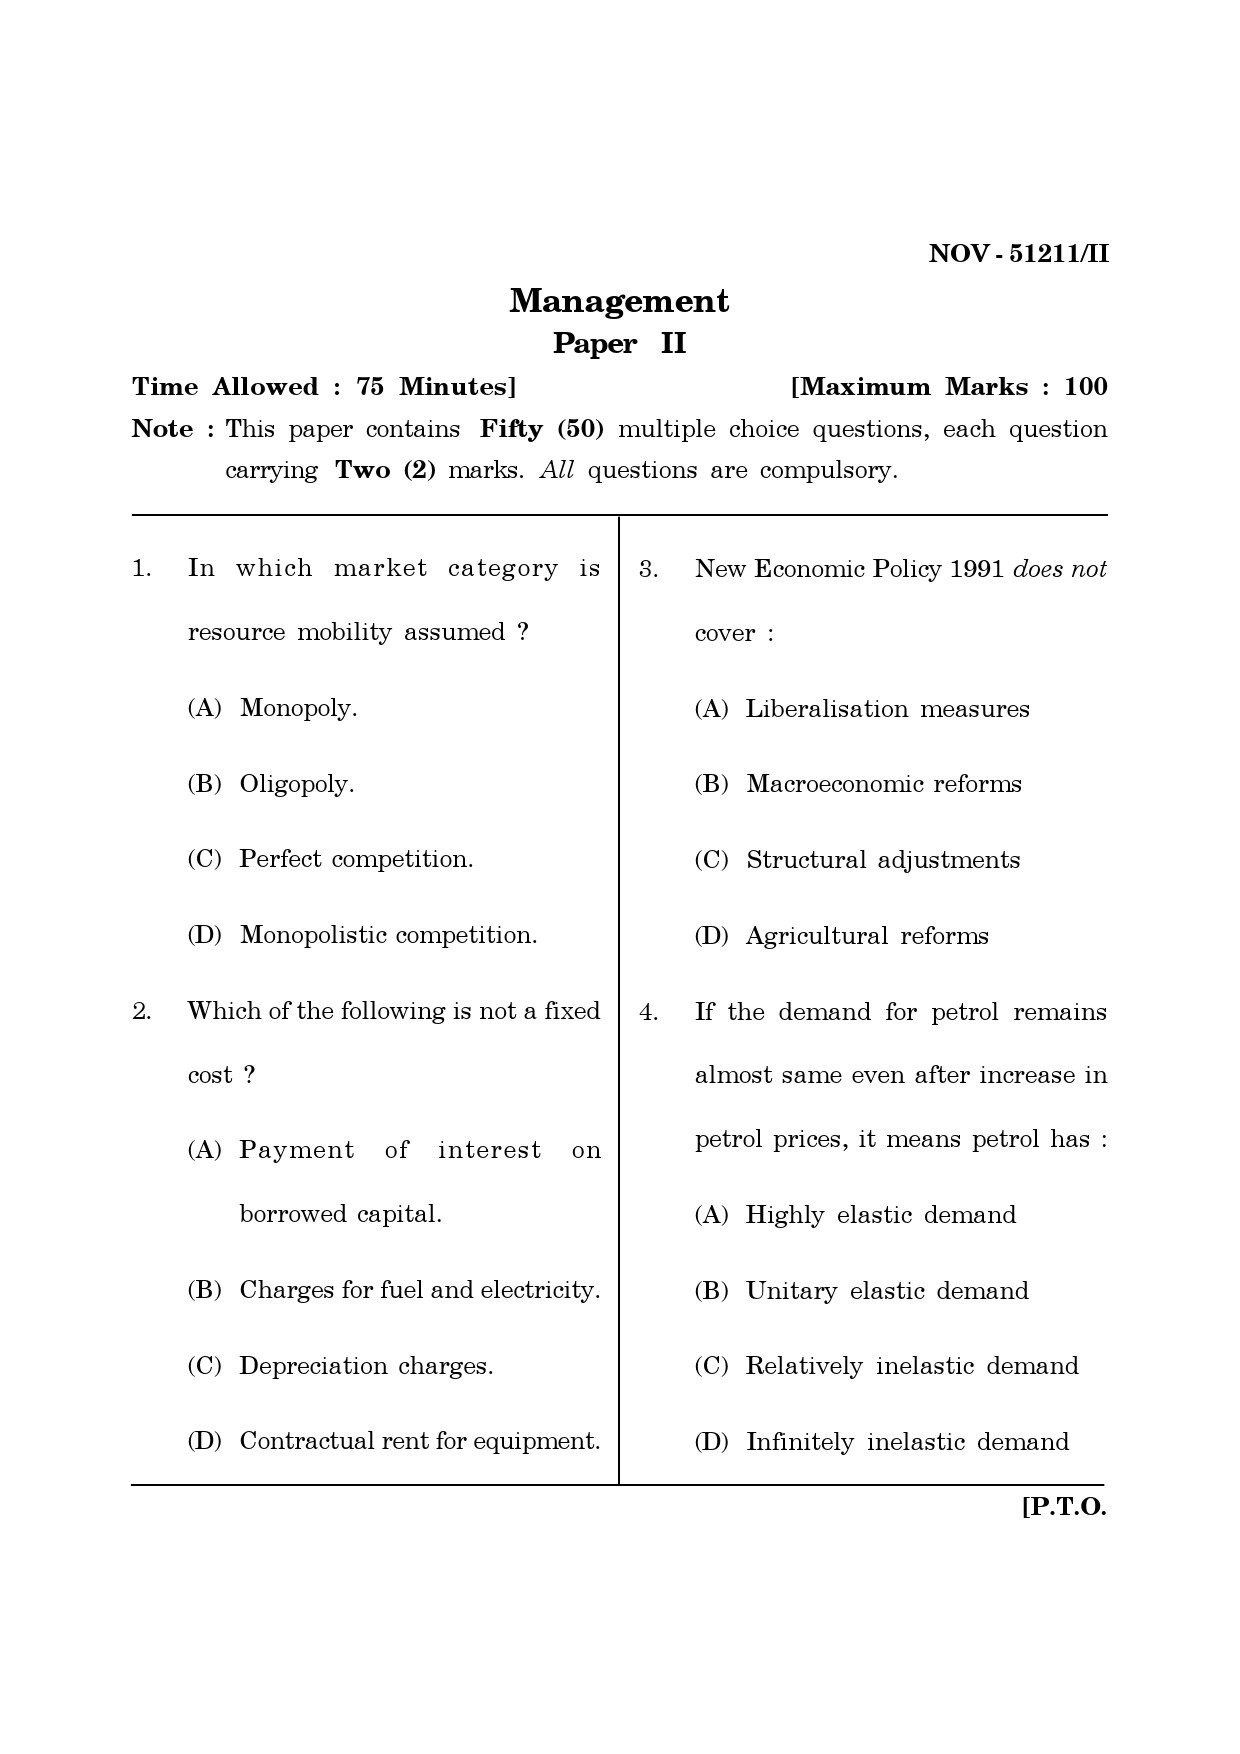 Maharashtra SET Management Question Paper II November 2011 1